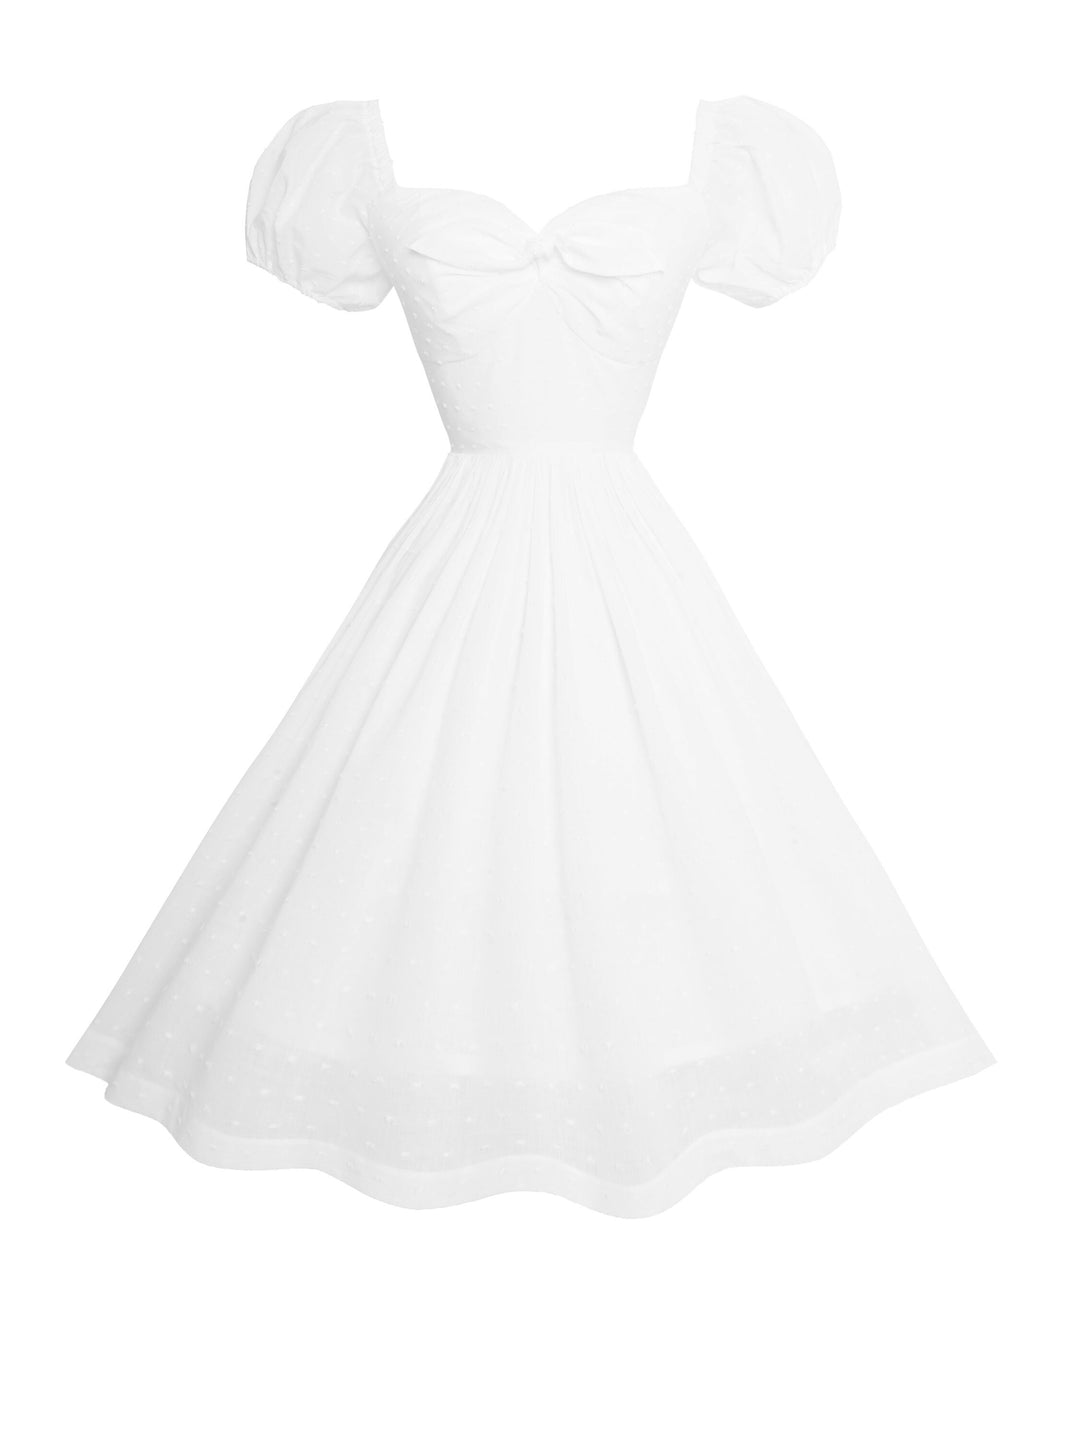 MTO - Dottie Dress White "Dotted Swiss"